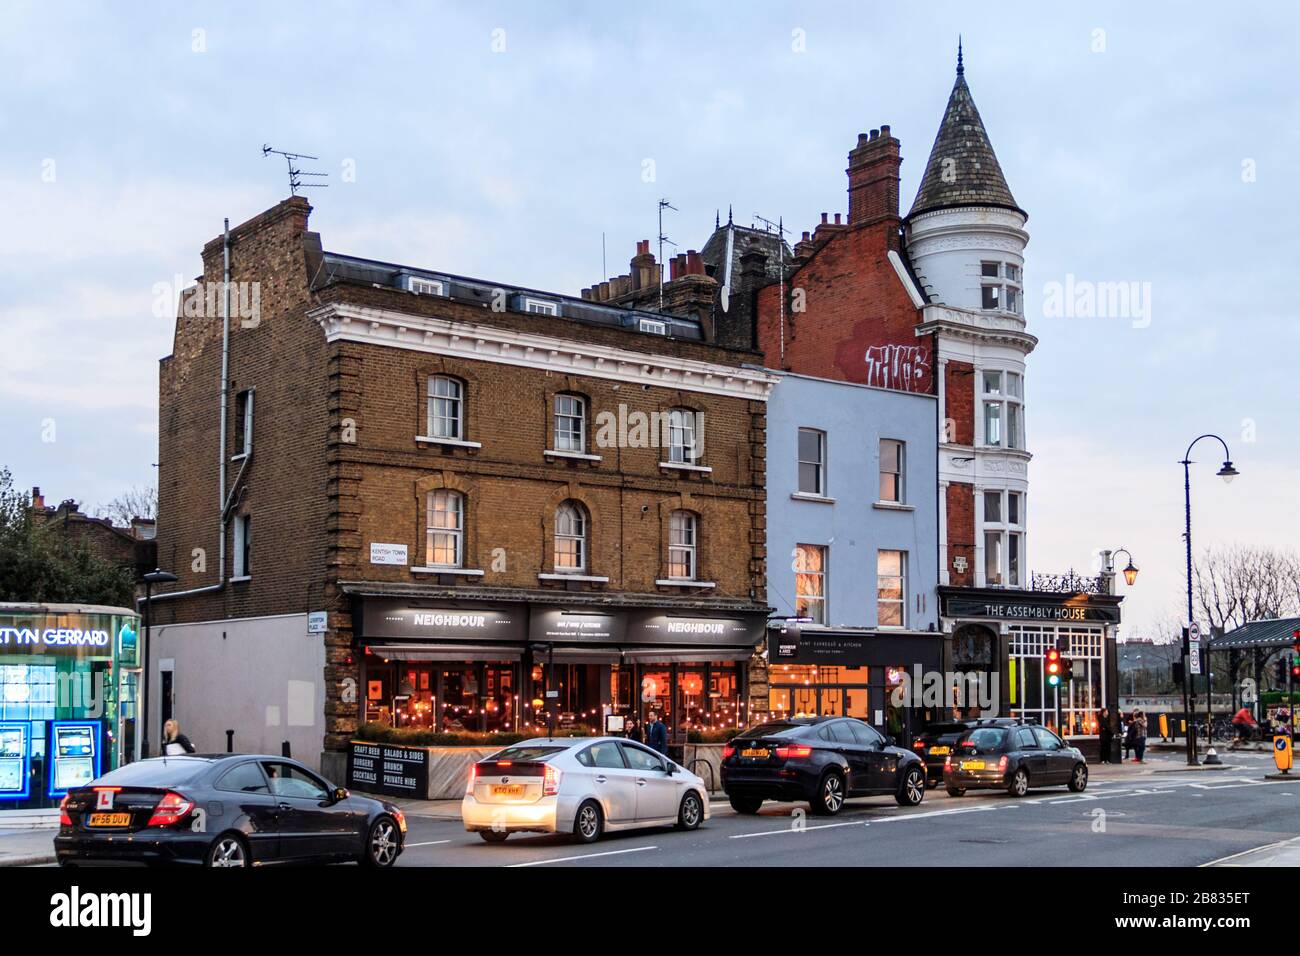 The Assembly House Public House y Neighbor Bar and Restaurant en Kentish Town, Londres, Reino Unido Foto de stock